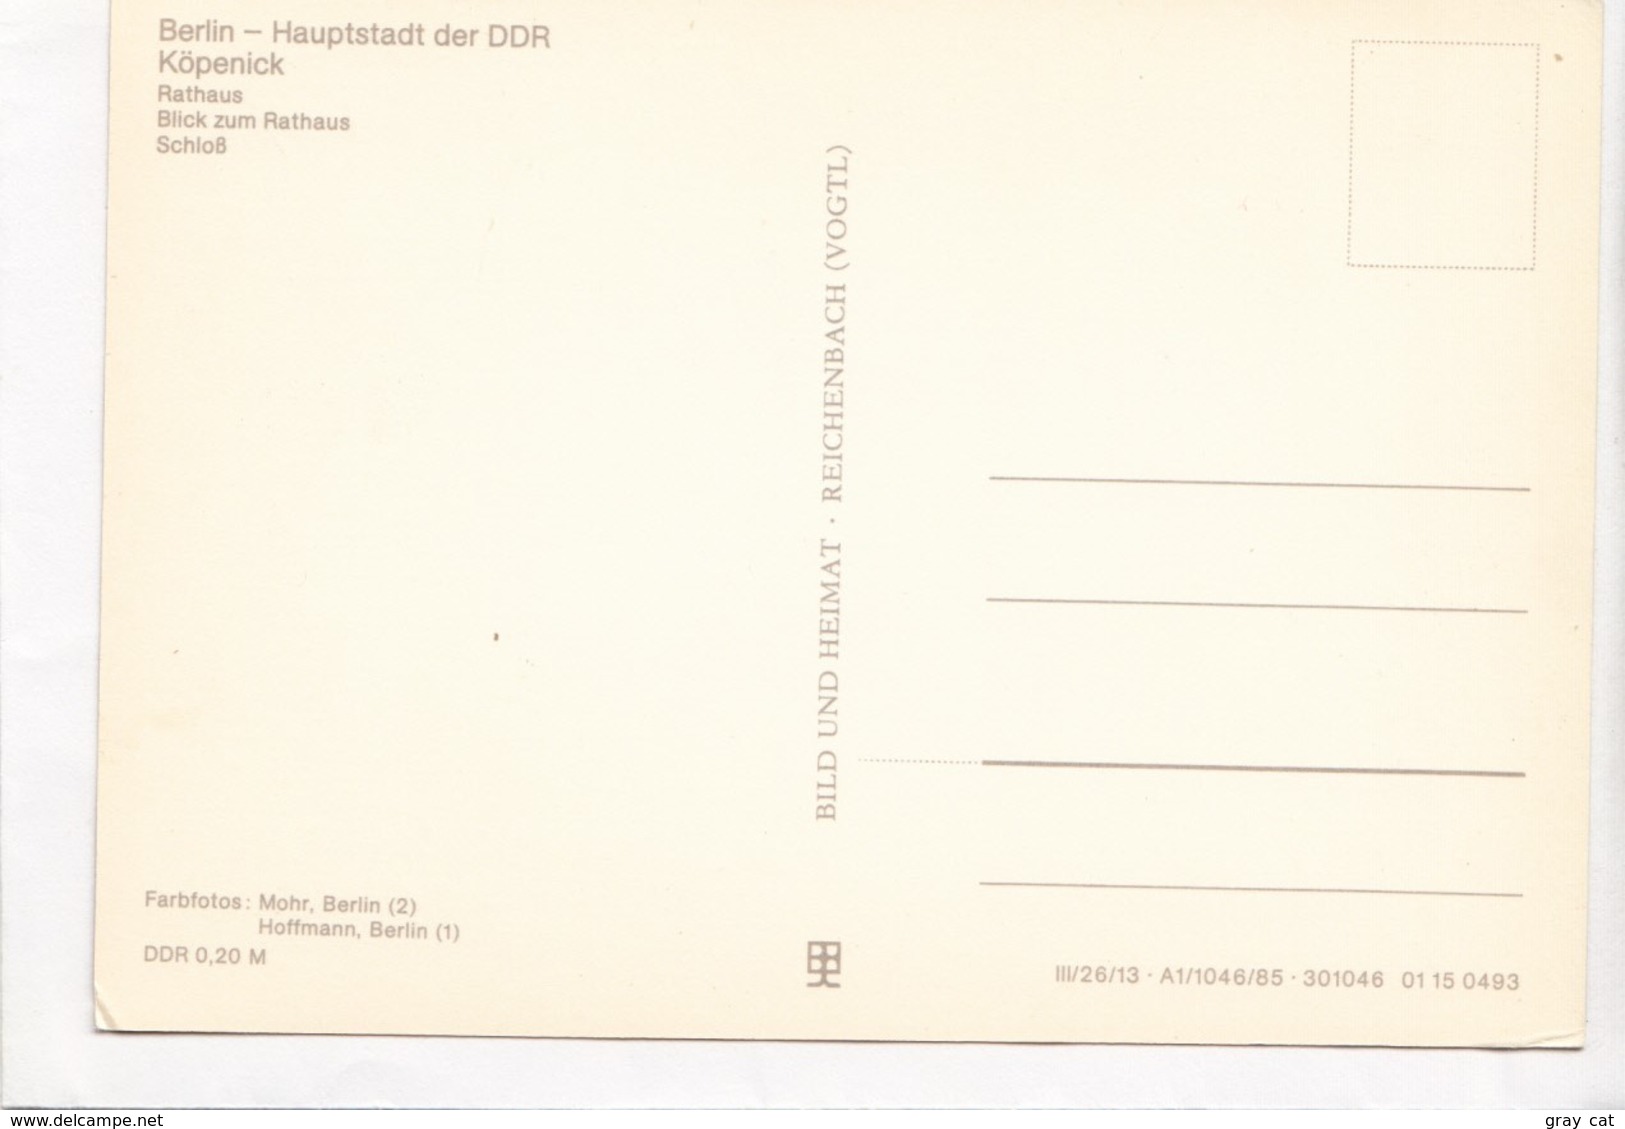 Gruß Aus Berlin-Köpenick, Unused Postcard [23873] - Koepenick